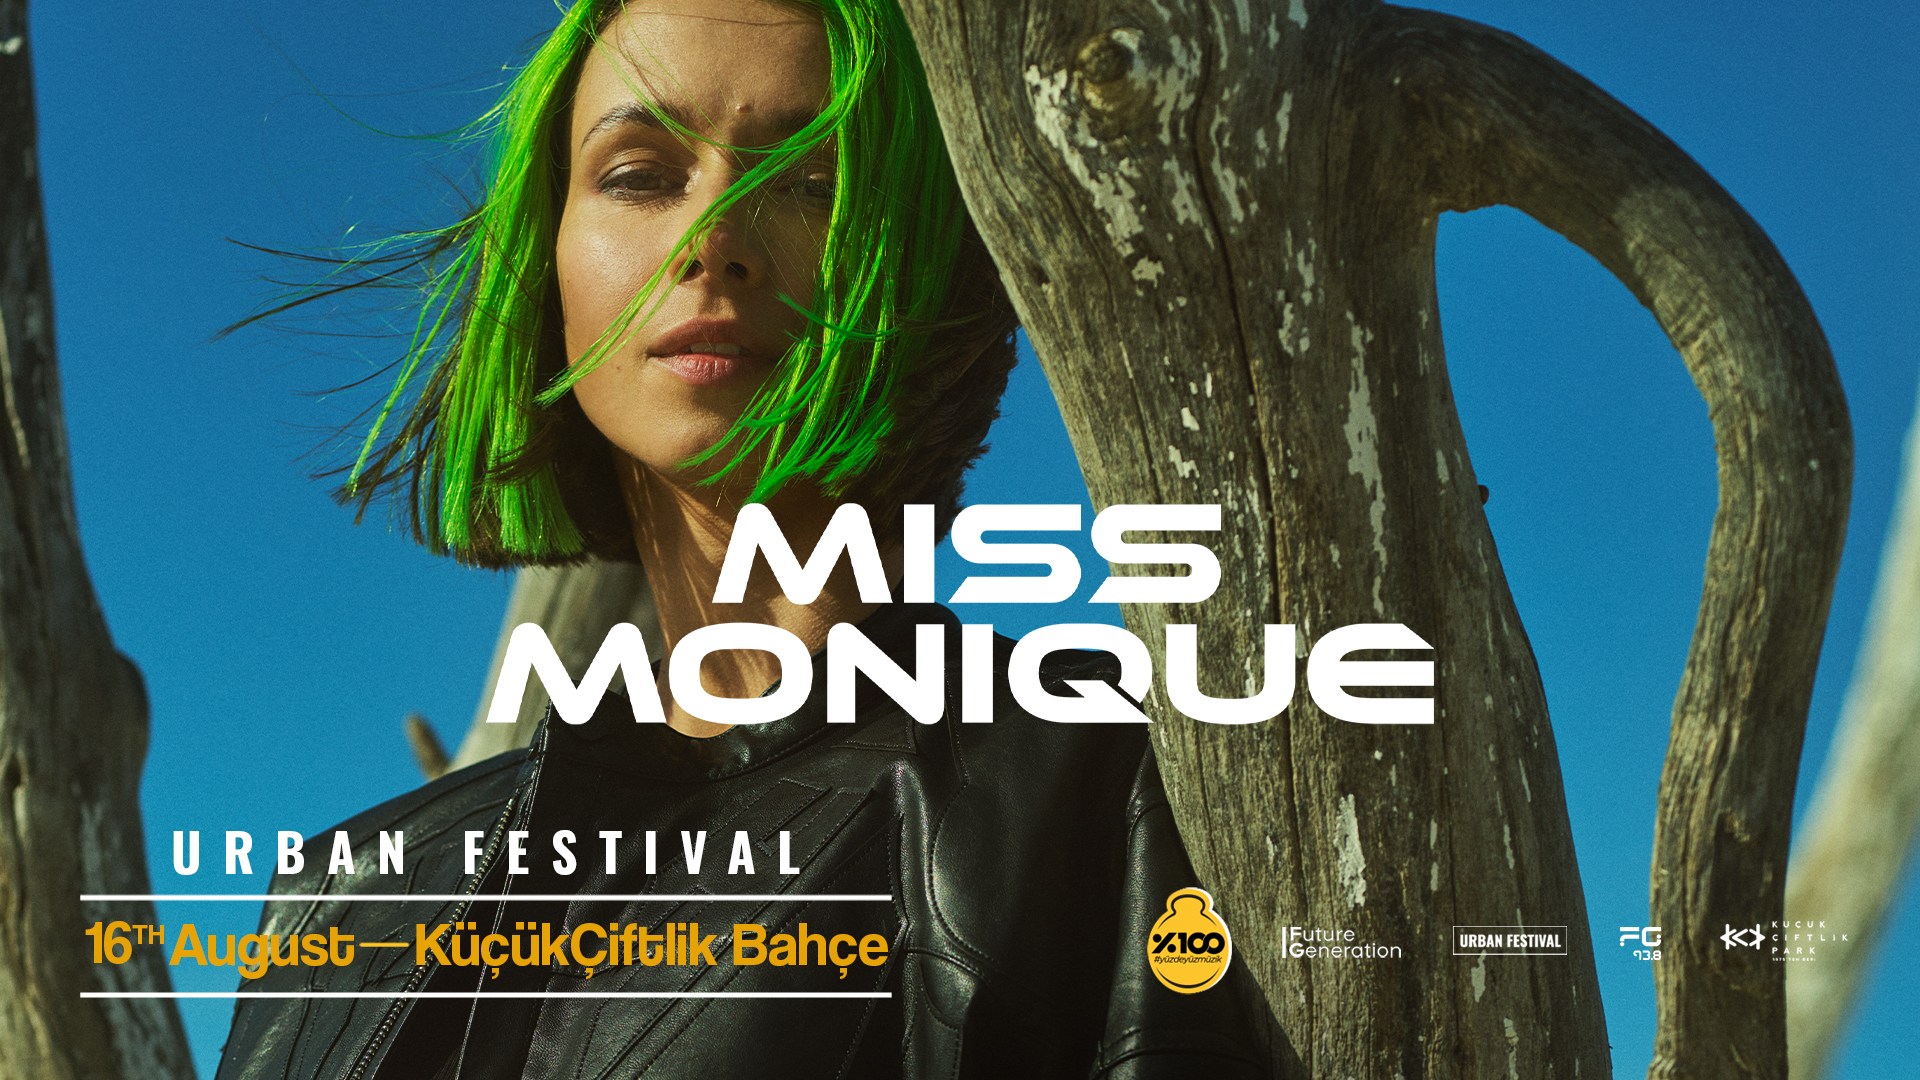 MISS MONIQUE | Urban Festival & %100 Music Presents